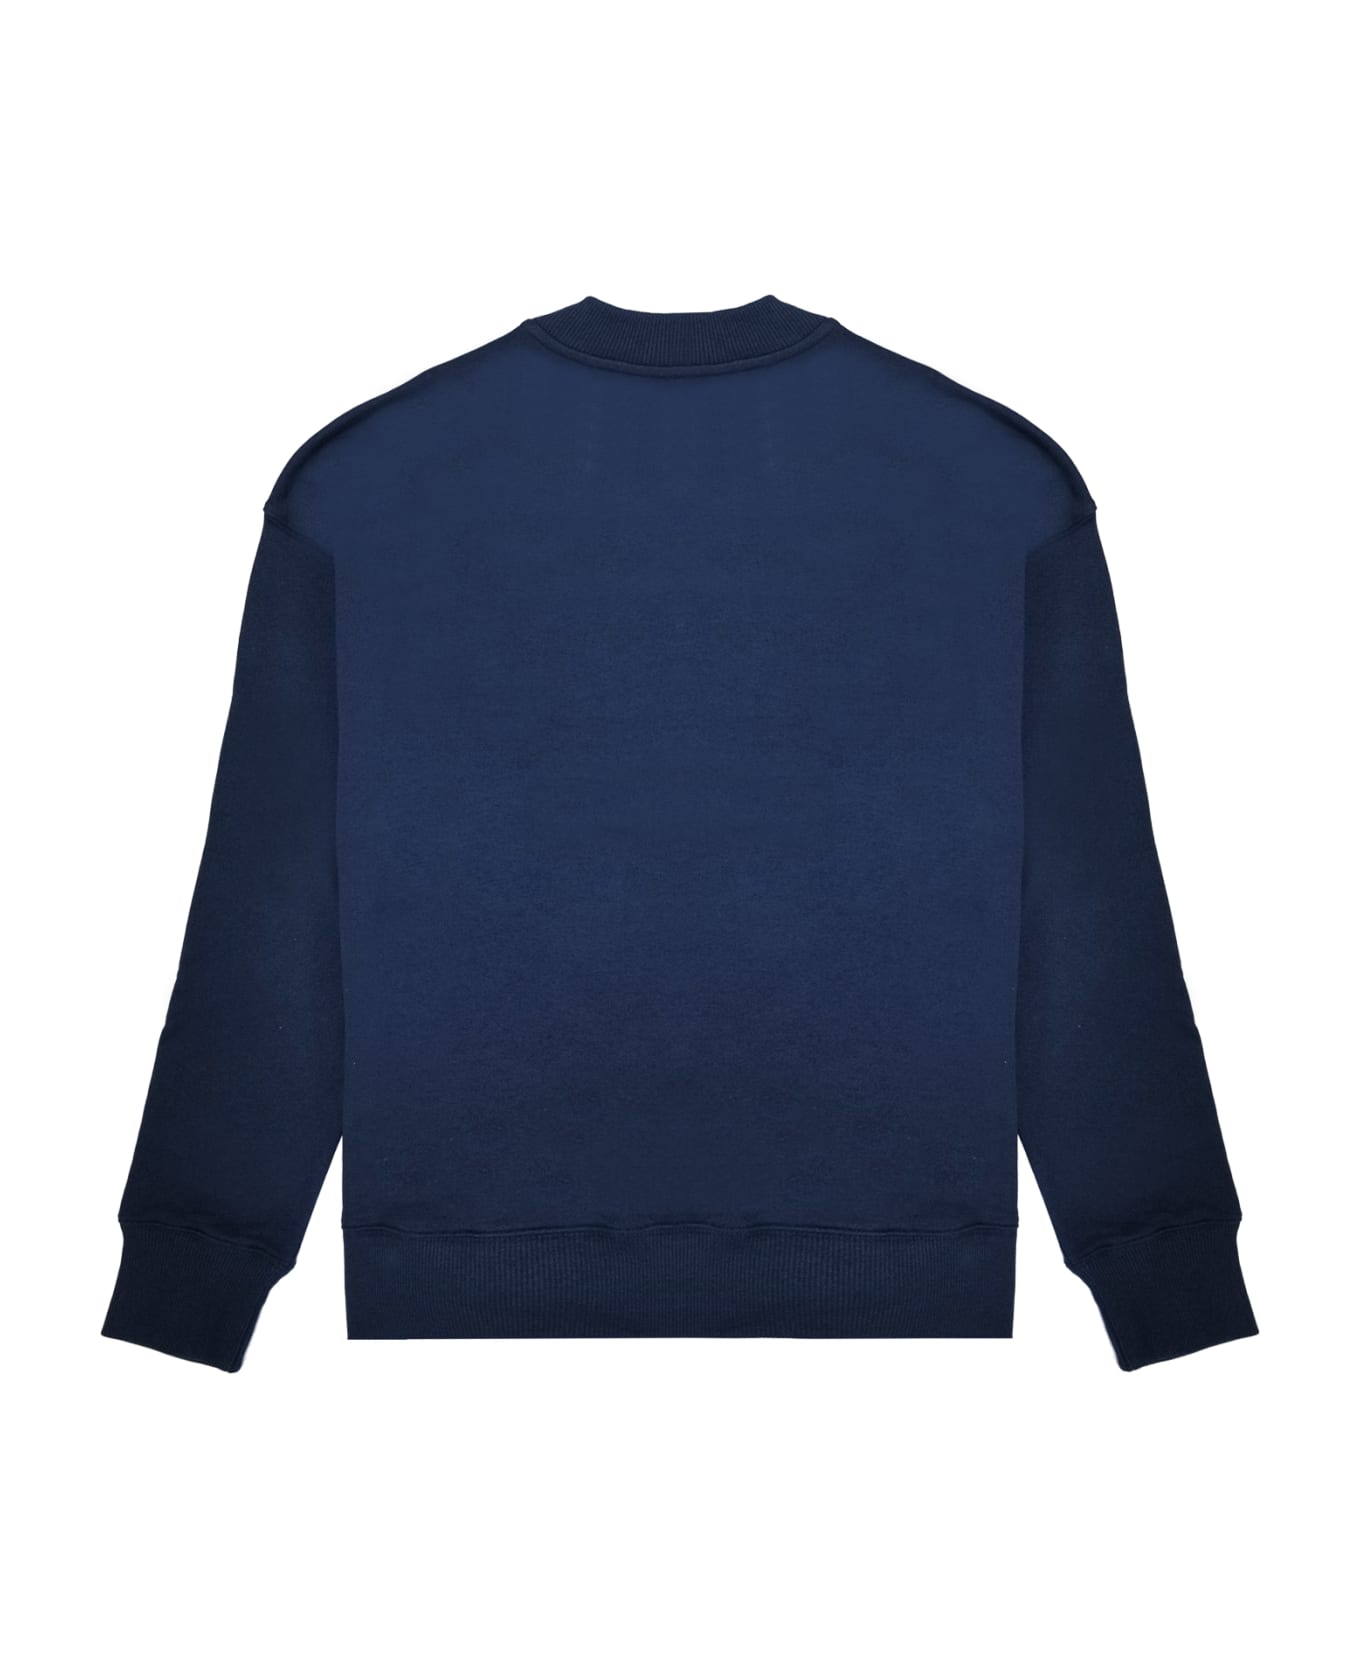 MSGM Sweatshirt - Blue